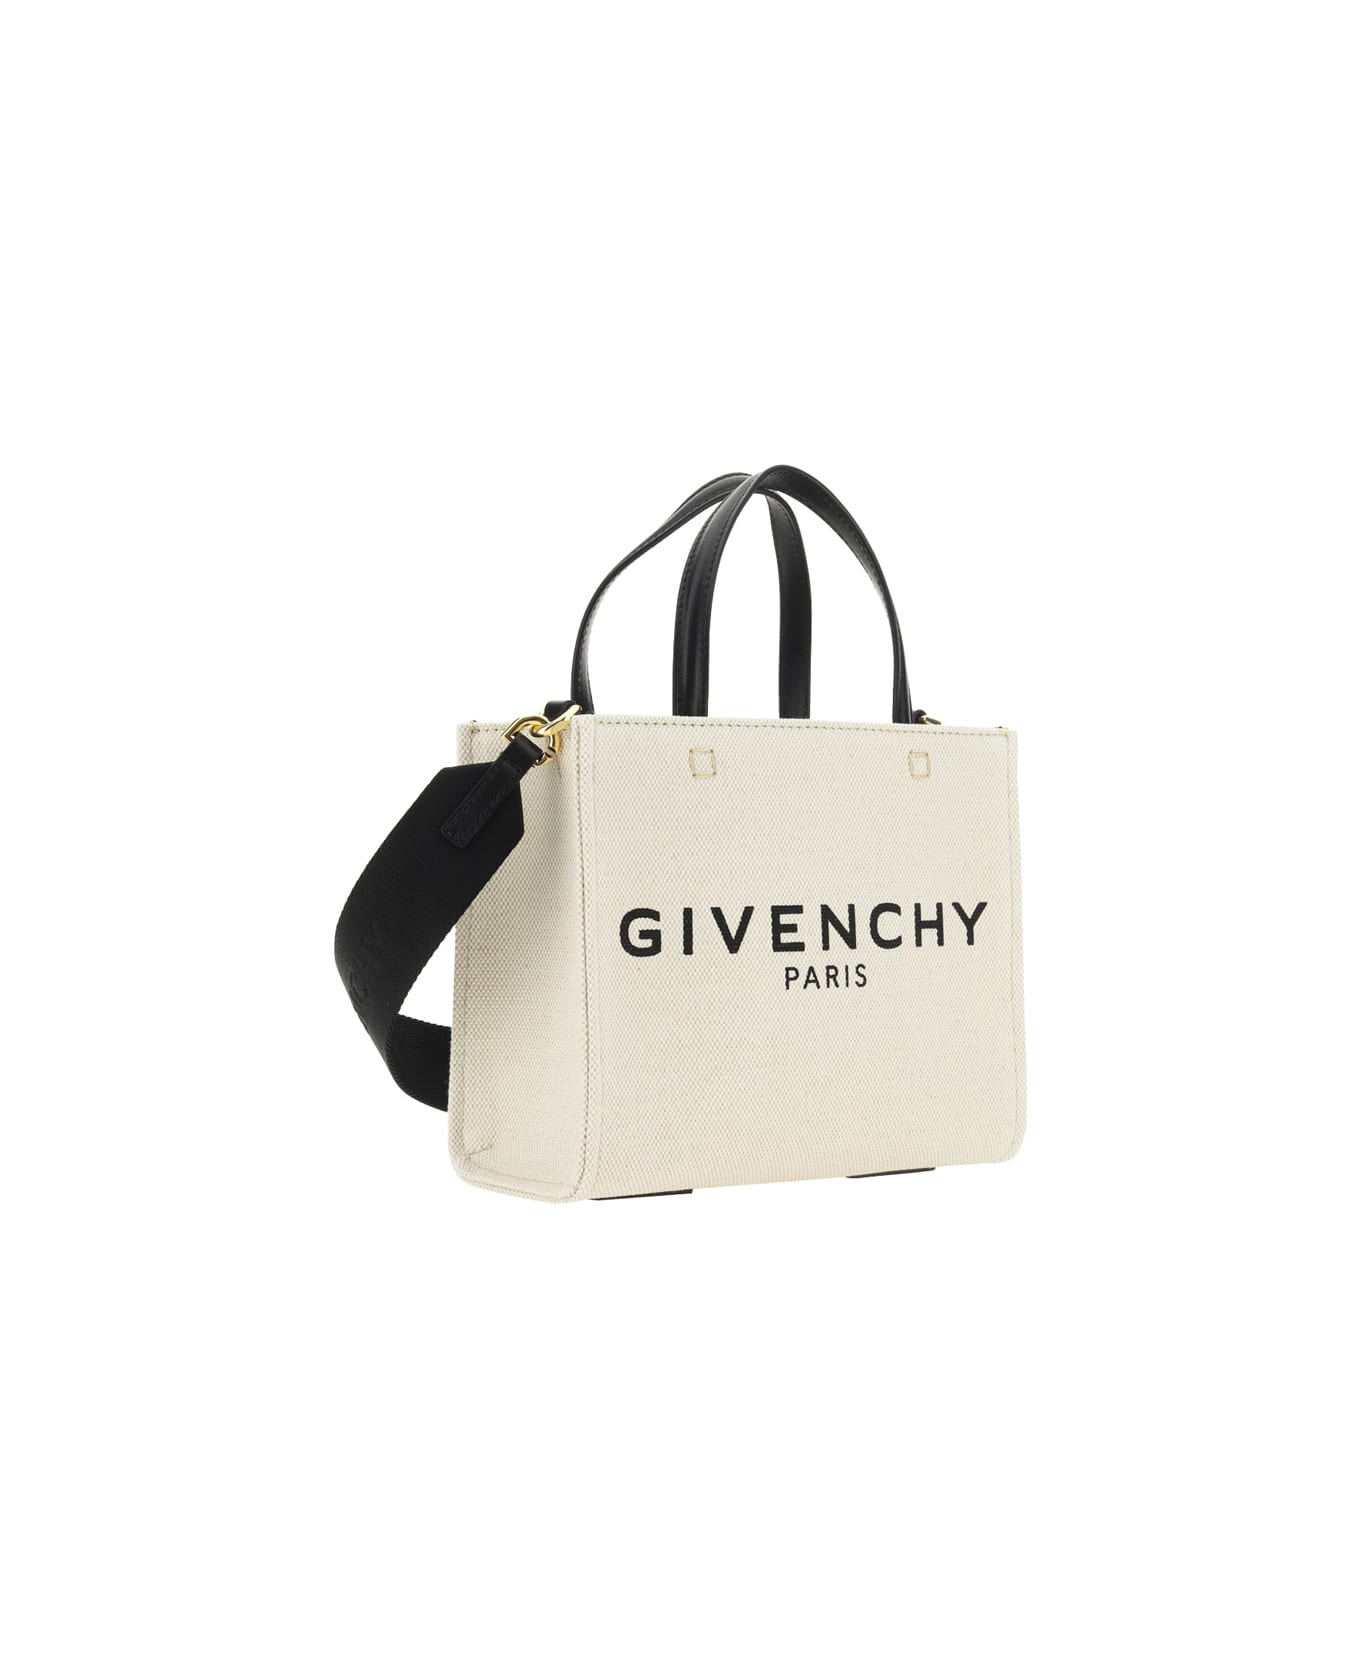 Givenchy G-tote Mini Tote - Beige/black